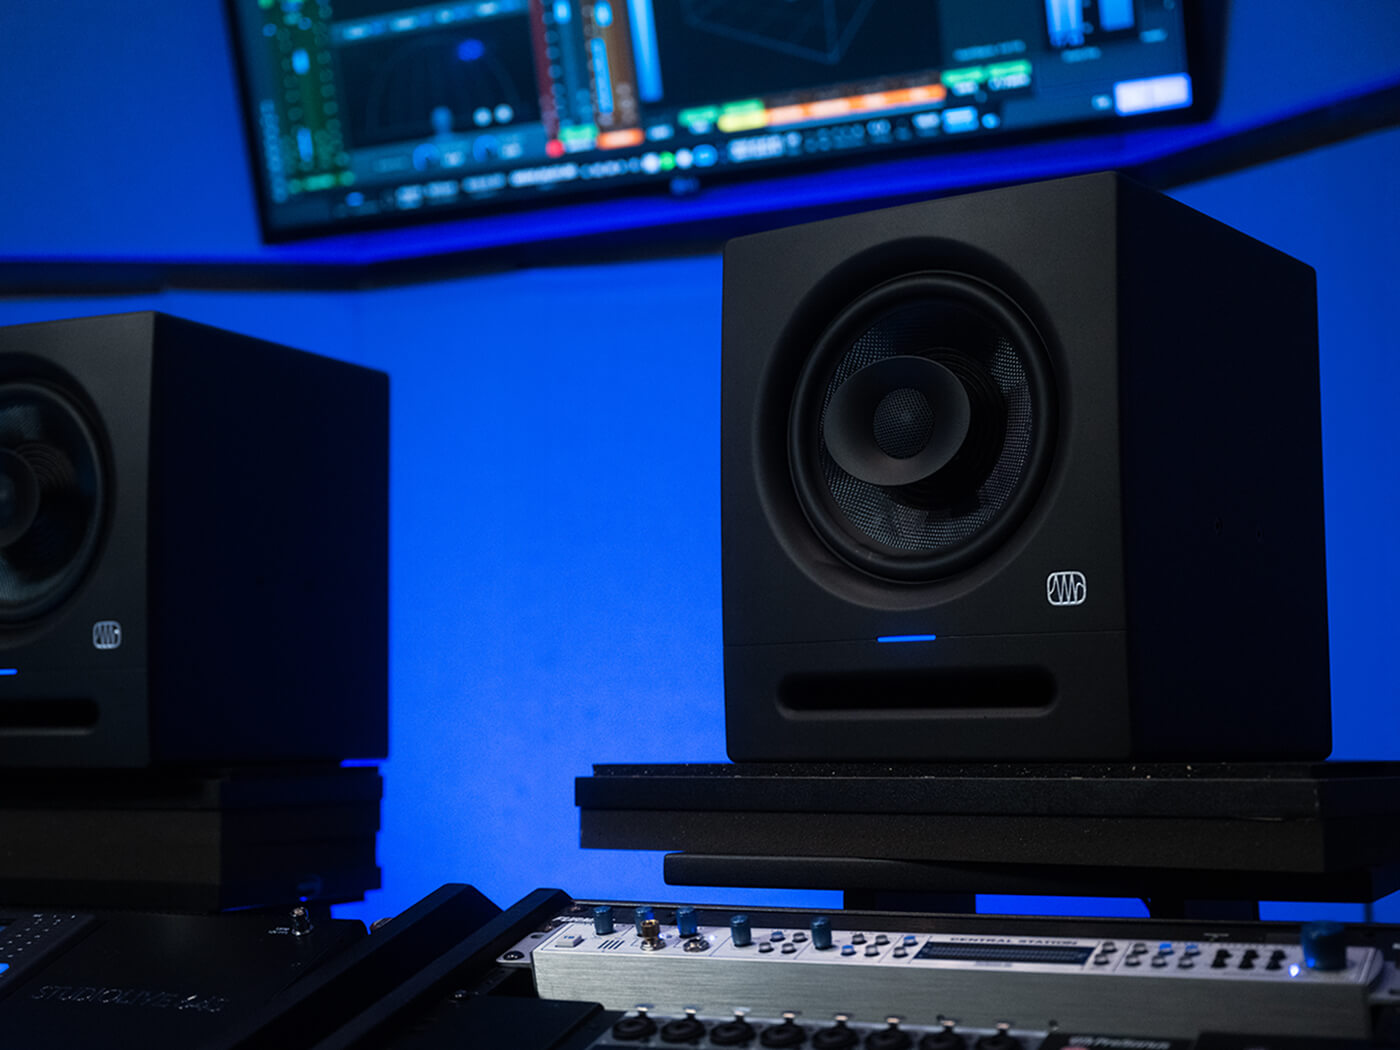 PreSonus Eris Pro 8 monitors on a studio desk